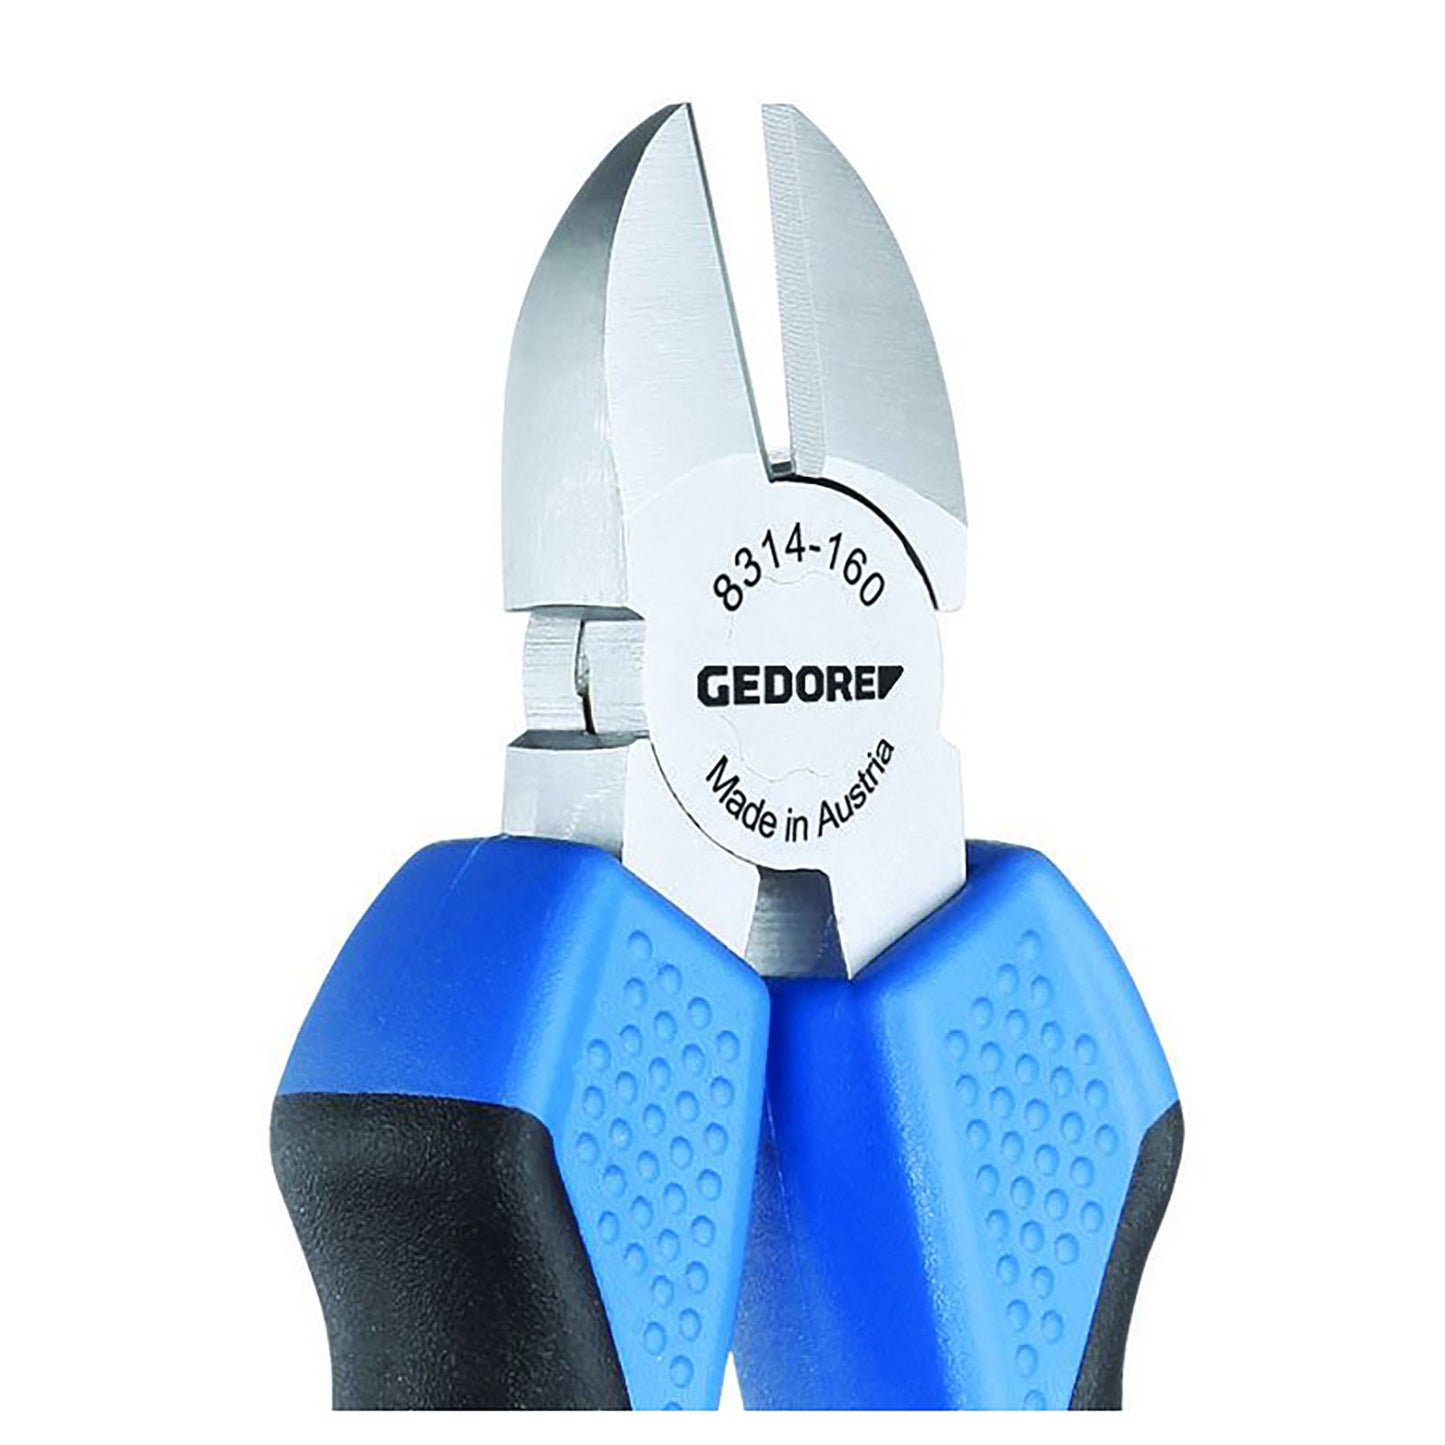 GEDORE 8314-125 JC - Diagonal cutting pliers 125 mm (6742300)